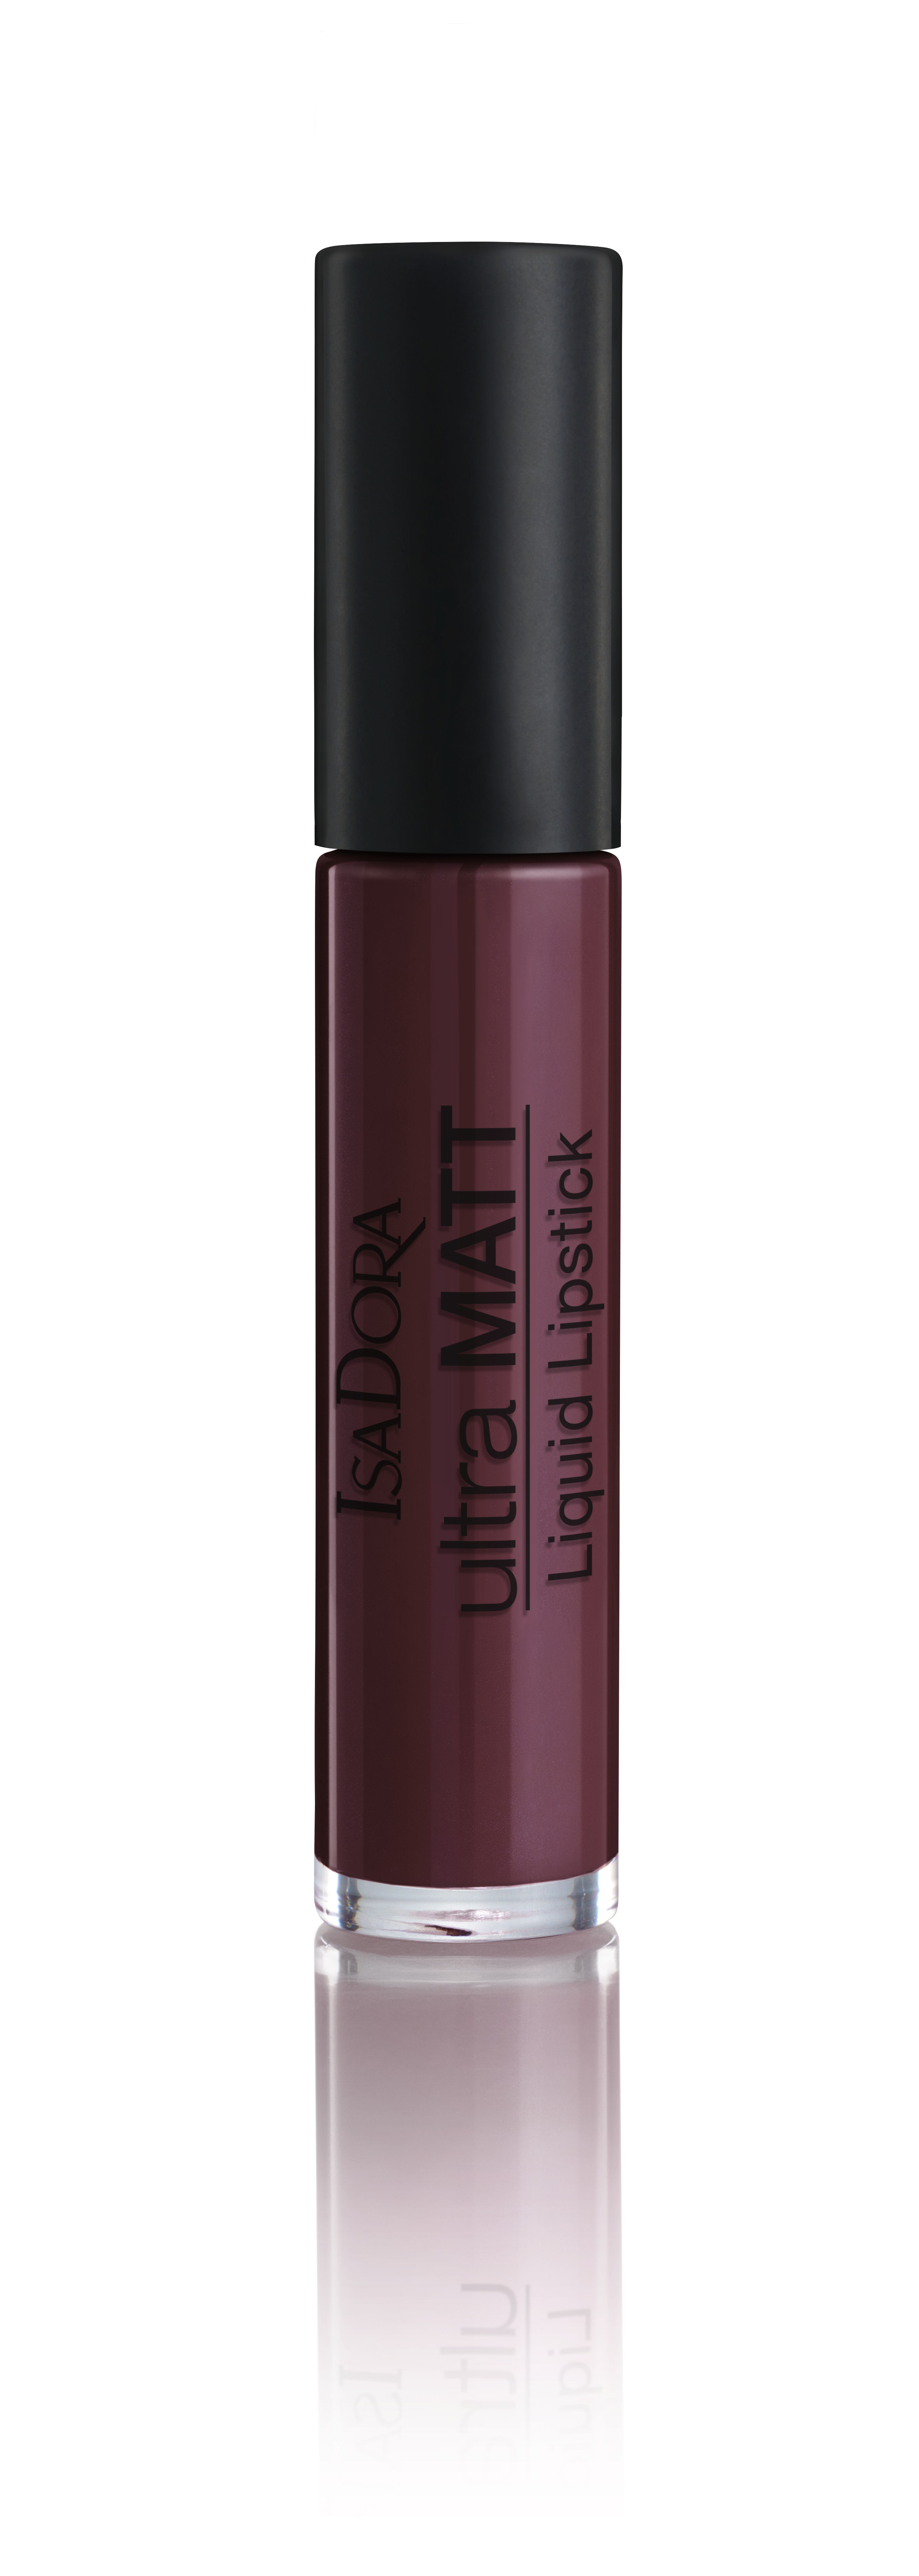 IsaDora Ultra Matt Liquid Lipstick - Plum Punch